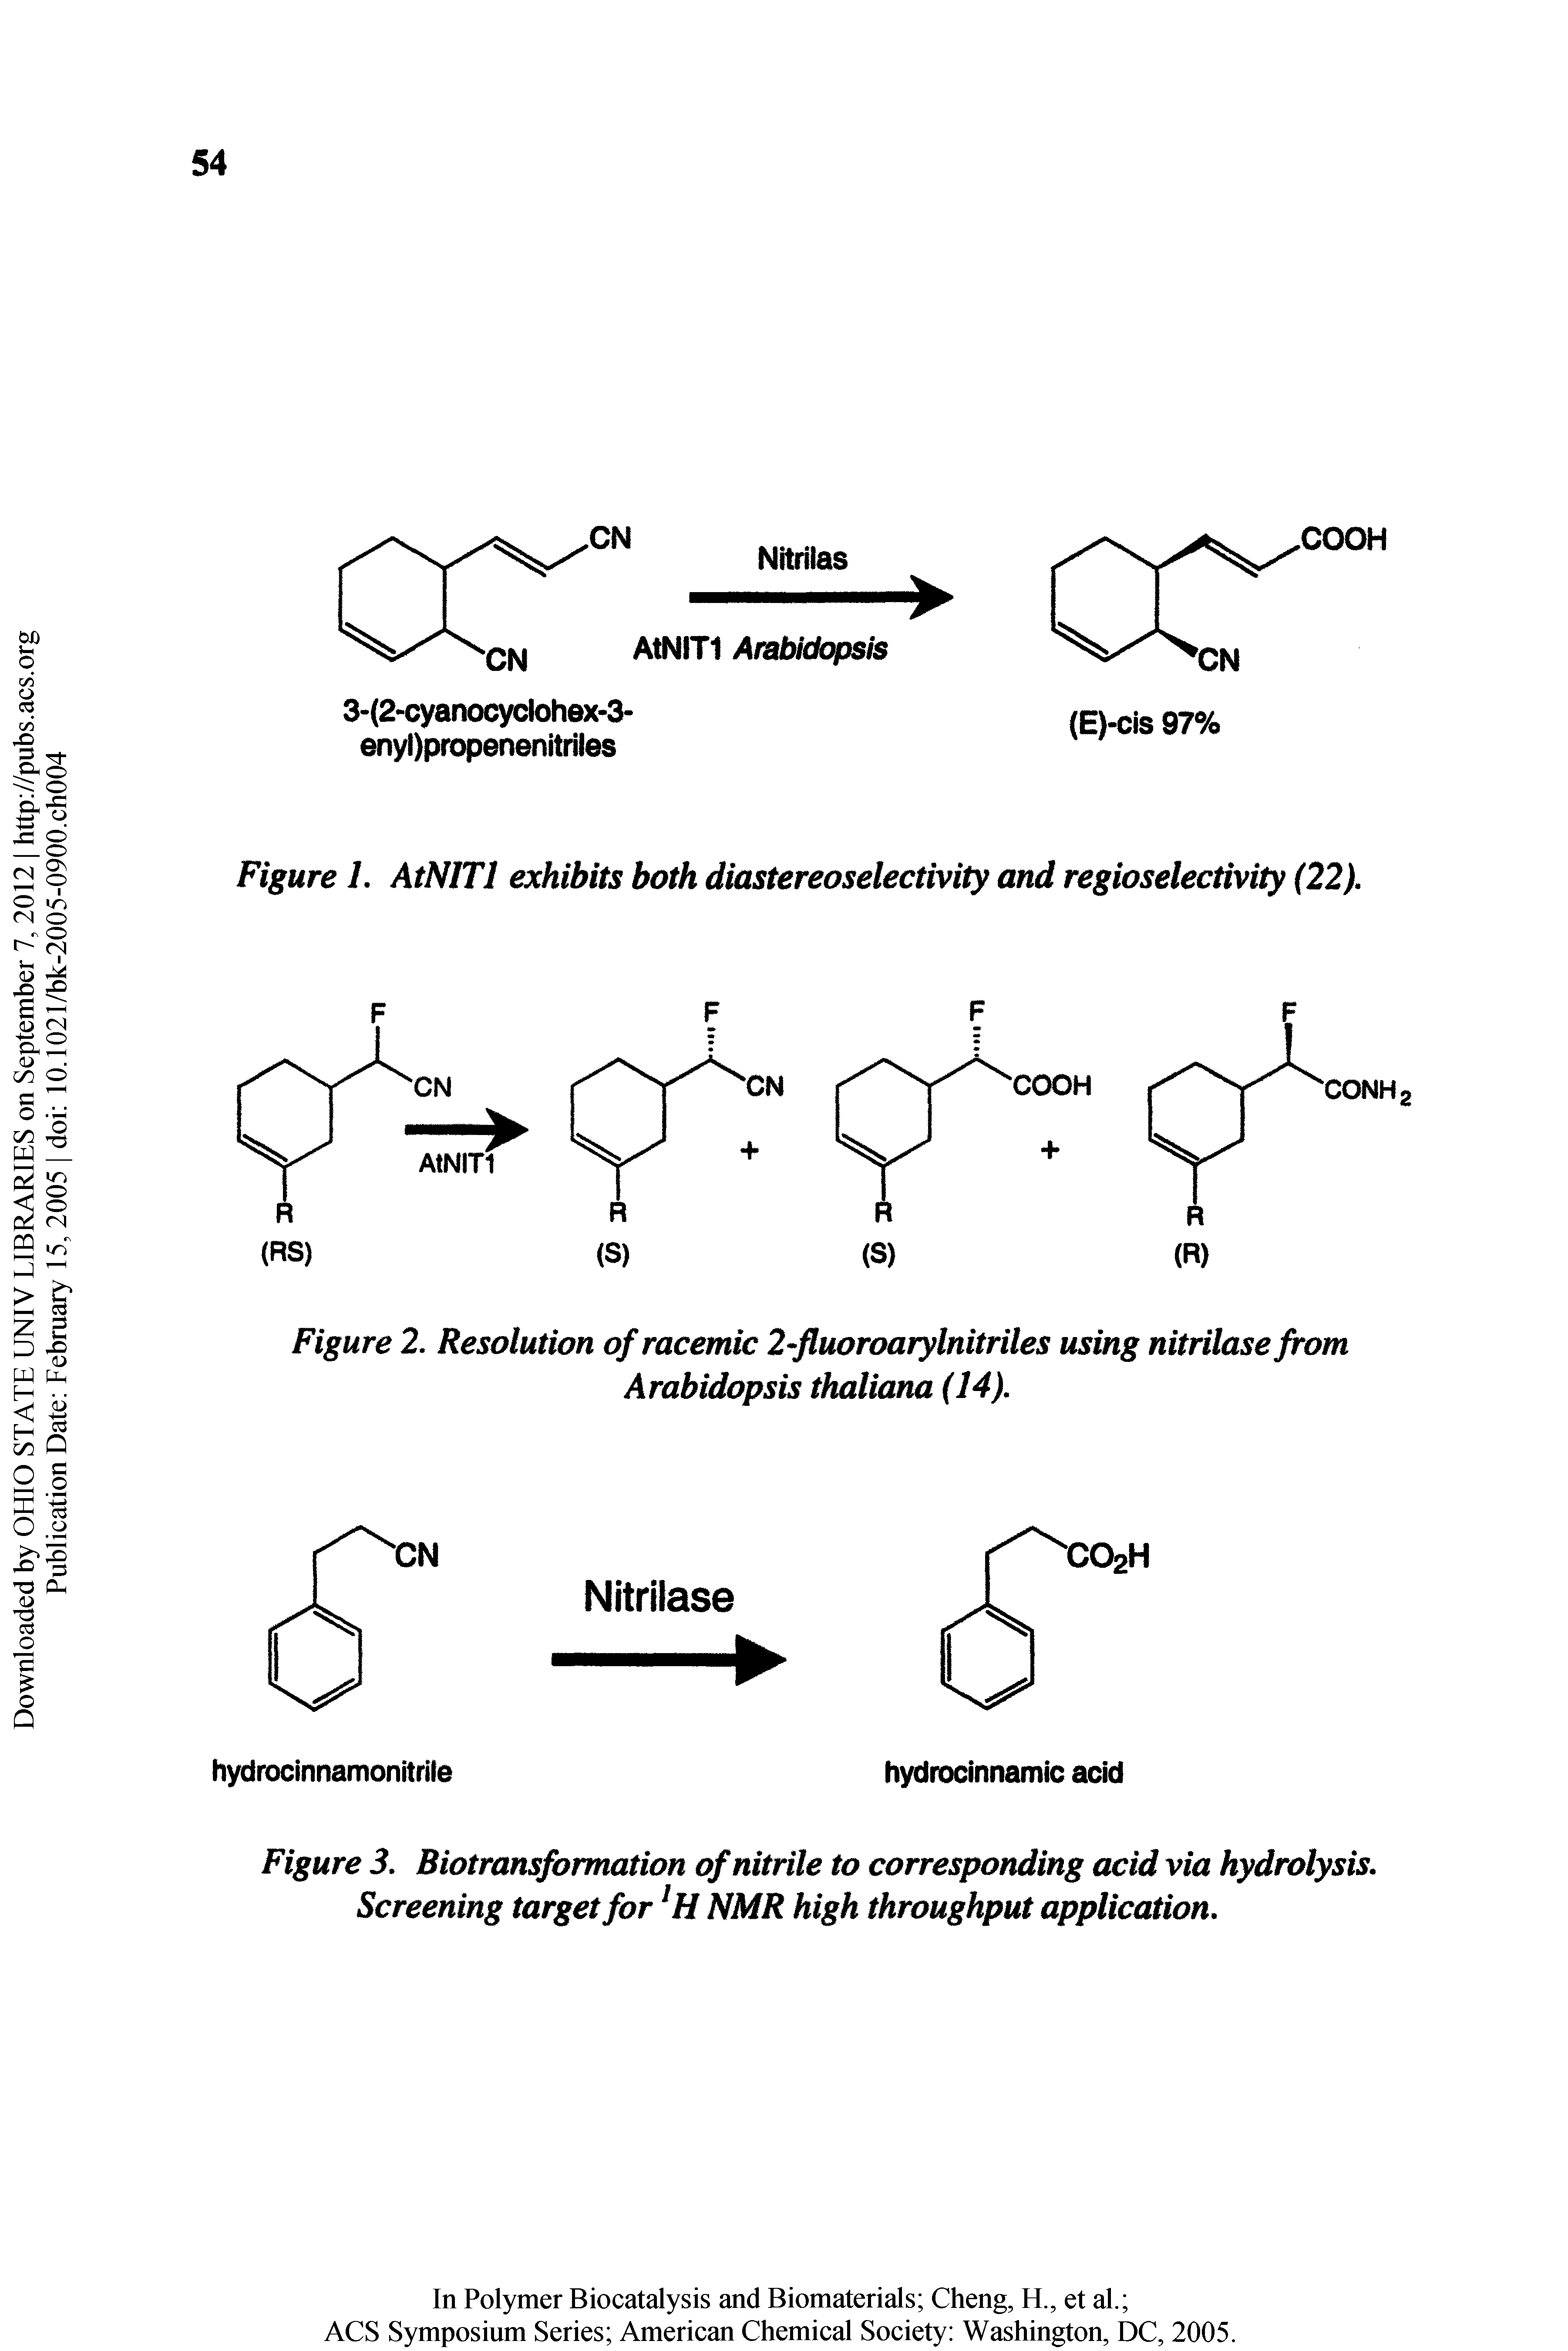 Figure 2. Resolution of racemic 2-fluoroarylnitriles using nitrilase from Arabidopsis thaliana (14).